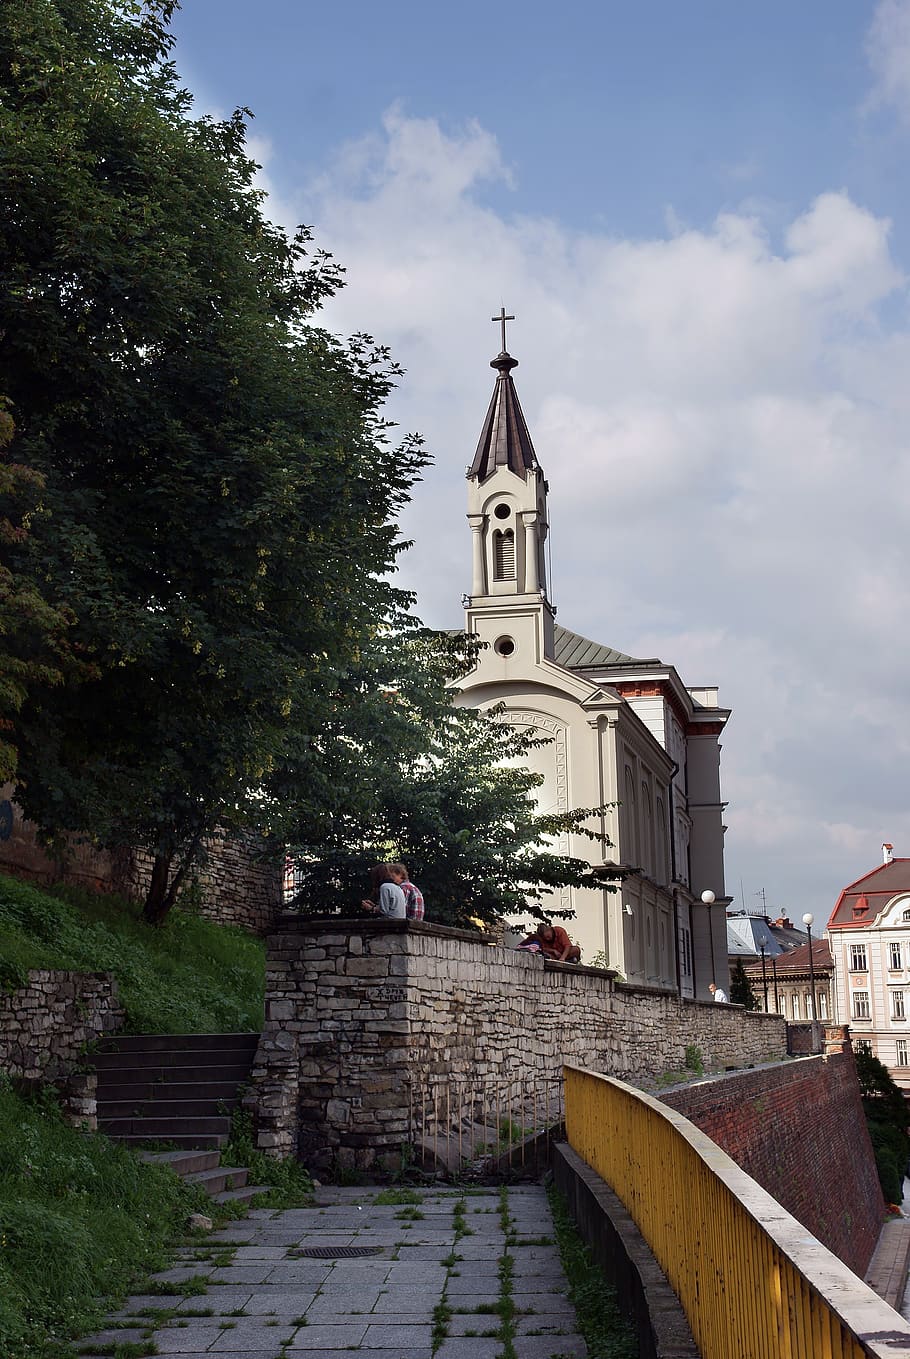 architecture, travel, old, religion, tower, historical, tourism, bielsko, bielsko-biała, poland